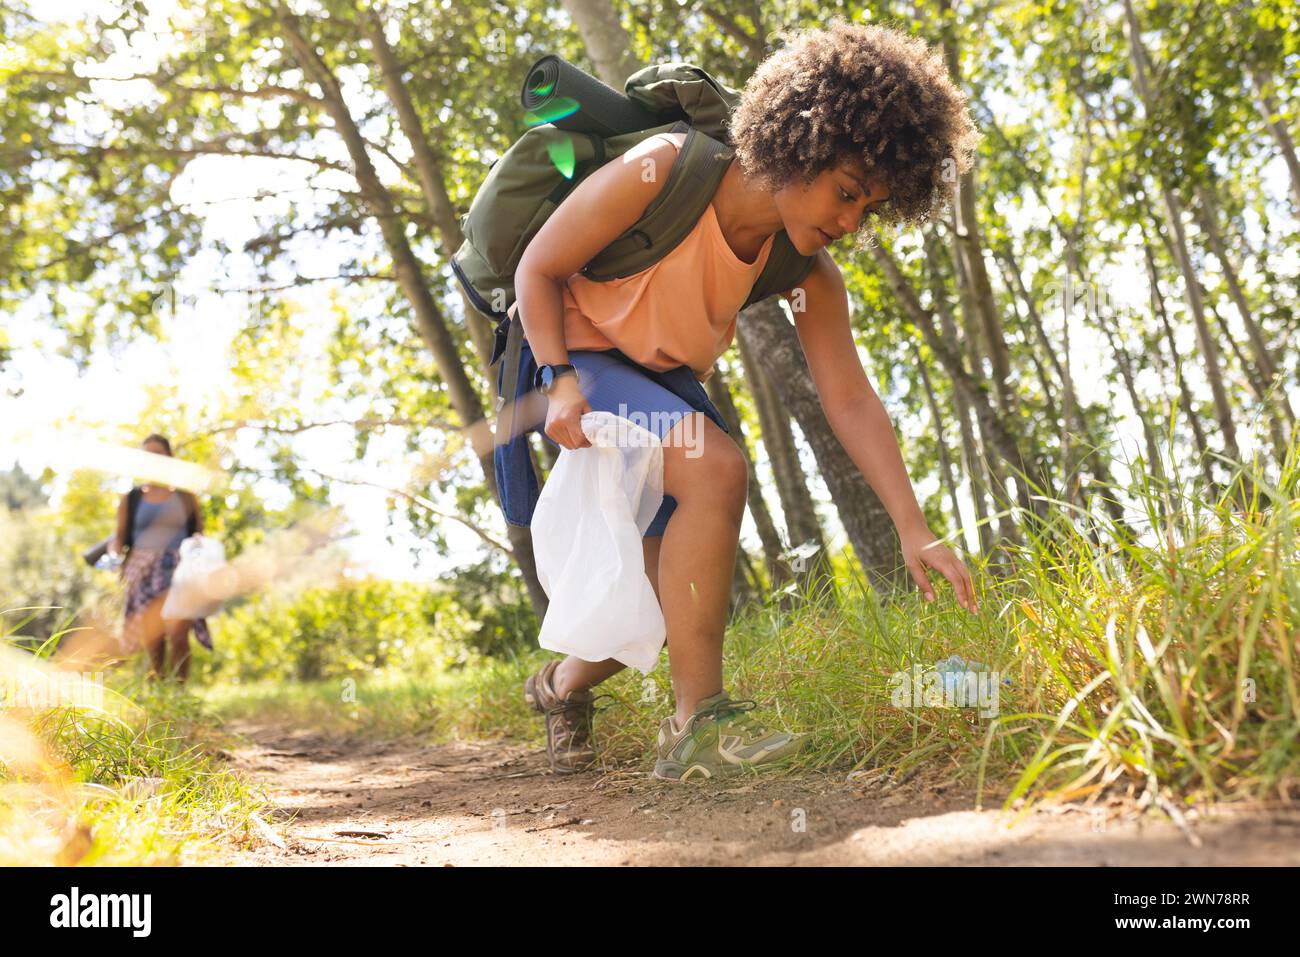 Young biracial woman picks up trash while hiking, promoting environmental care Stock Photo